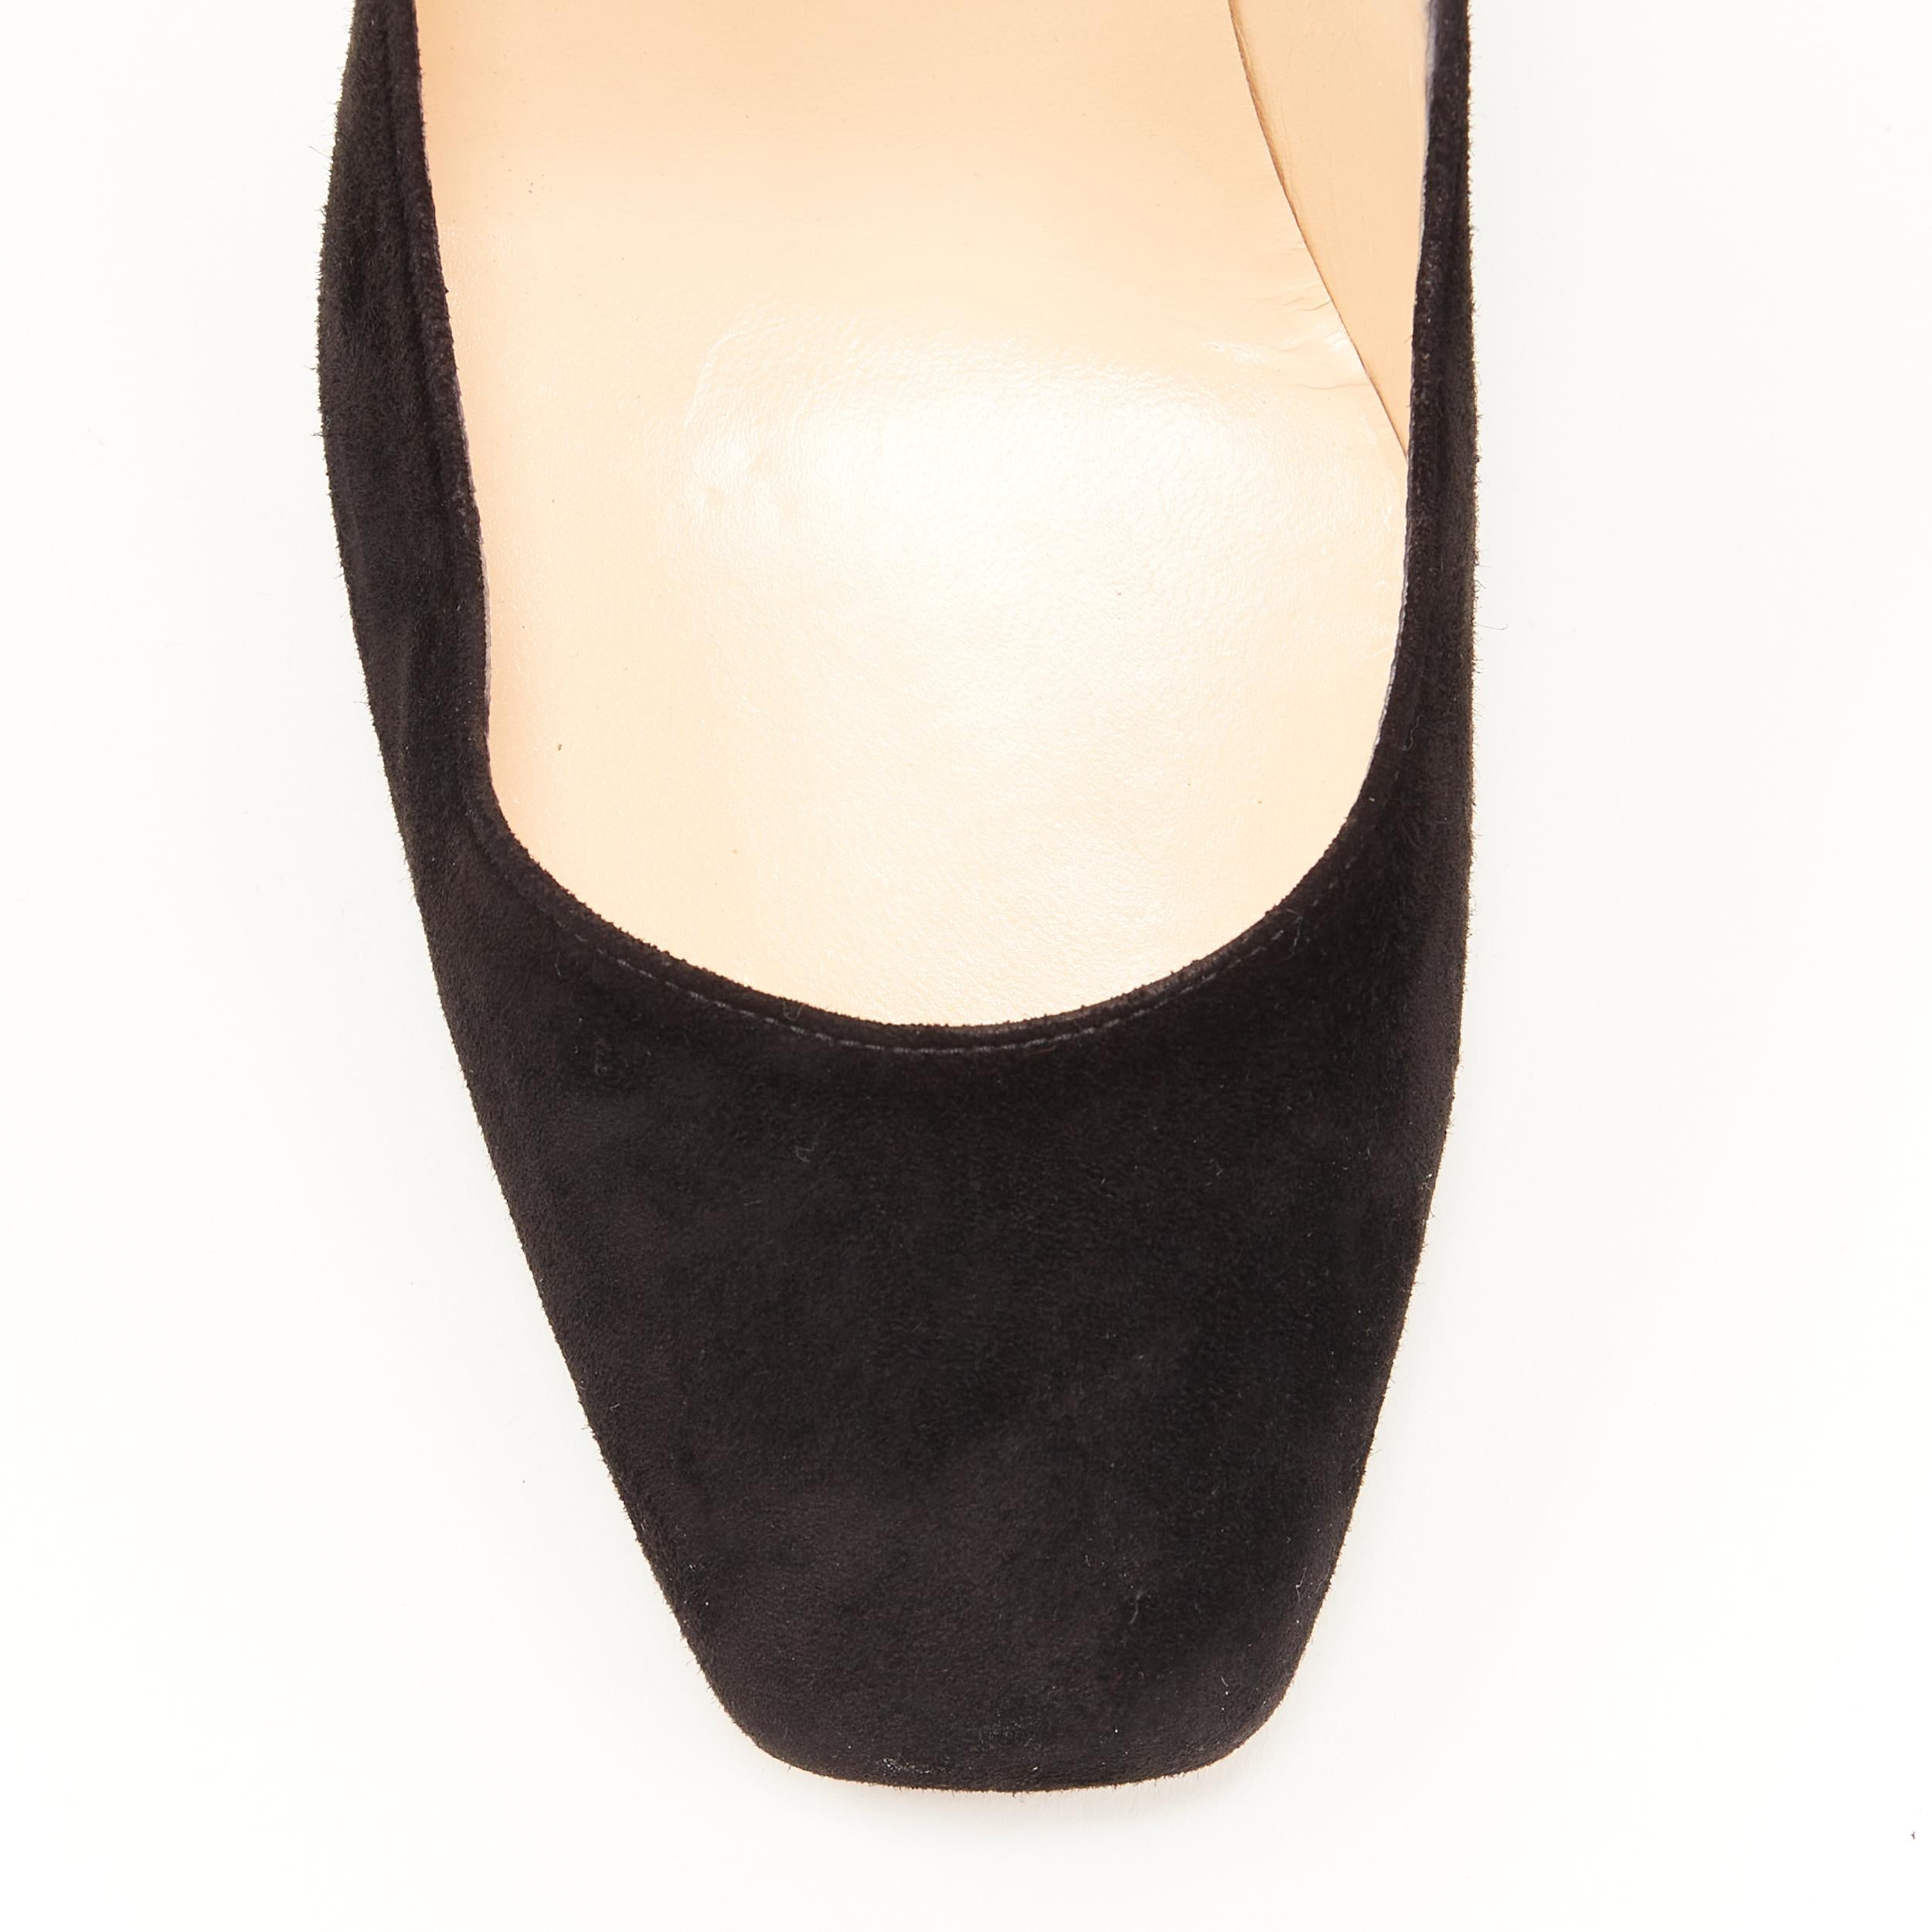 Women's new CHRISTIAN LOUBOUTIN black suede leather square toe high heel pump EU38